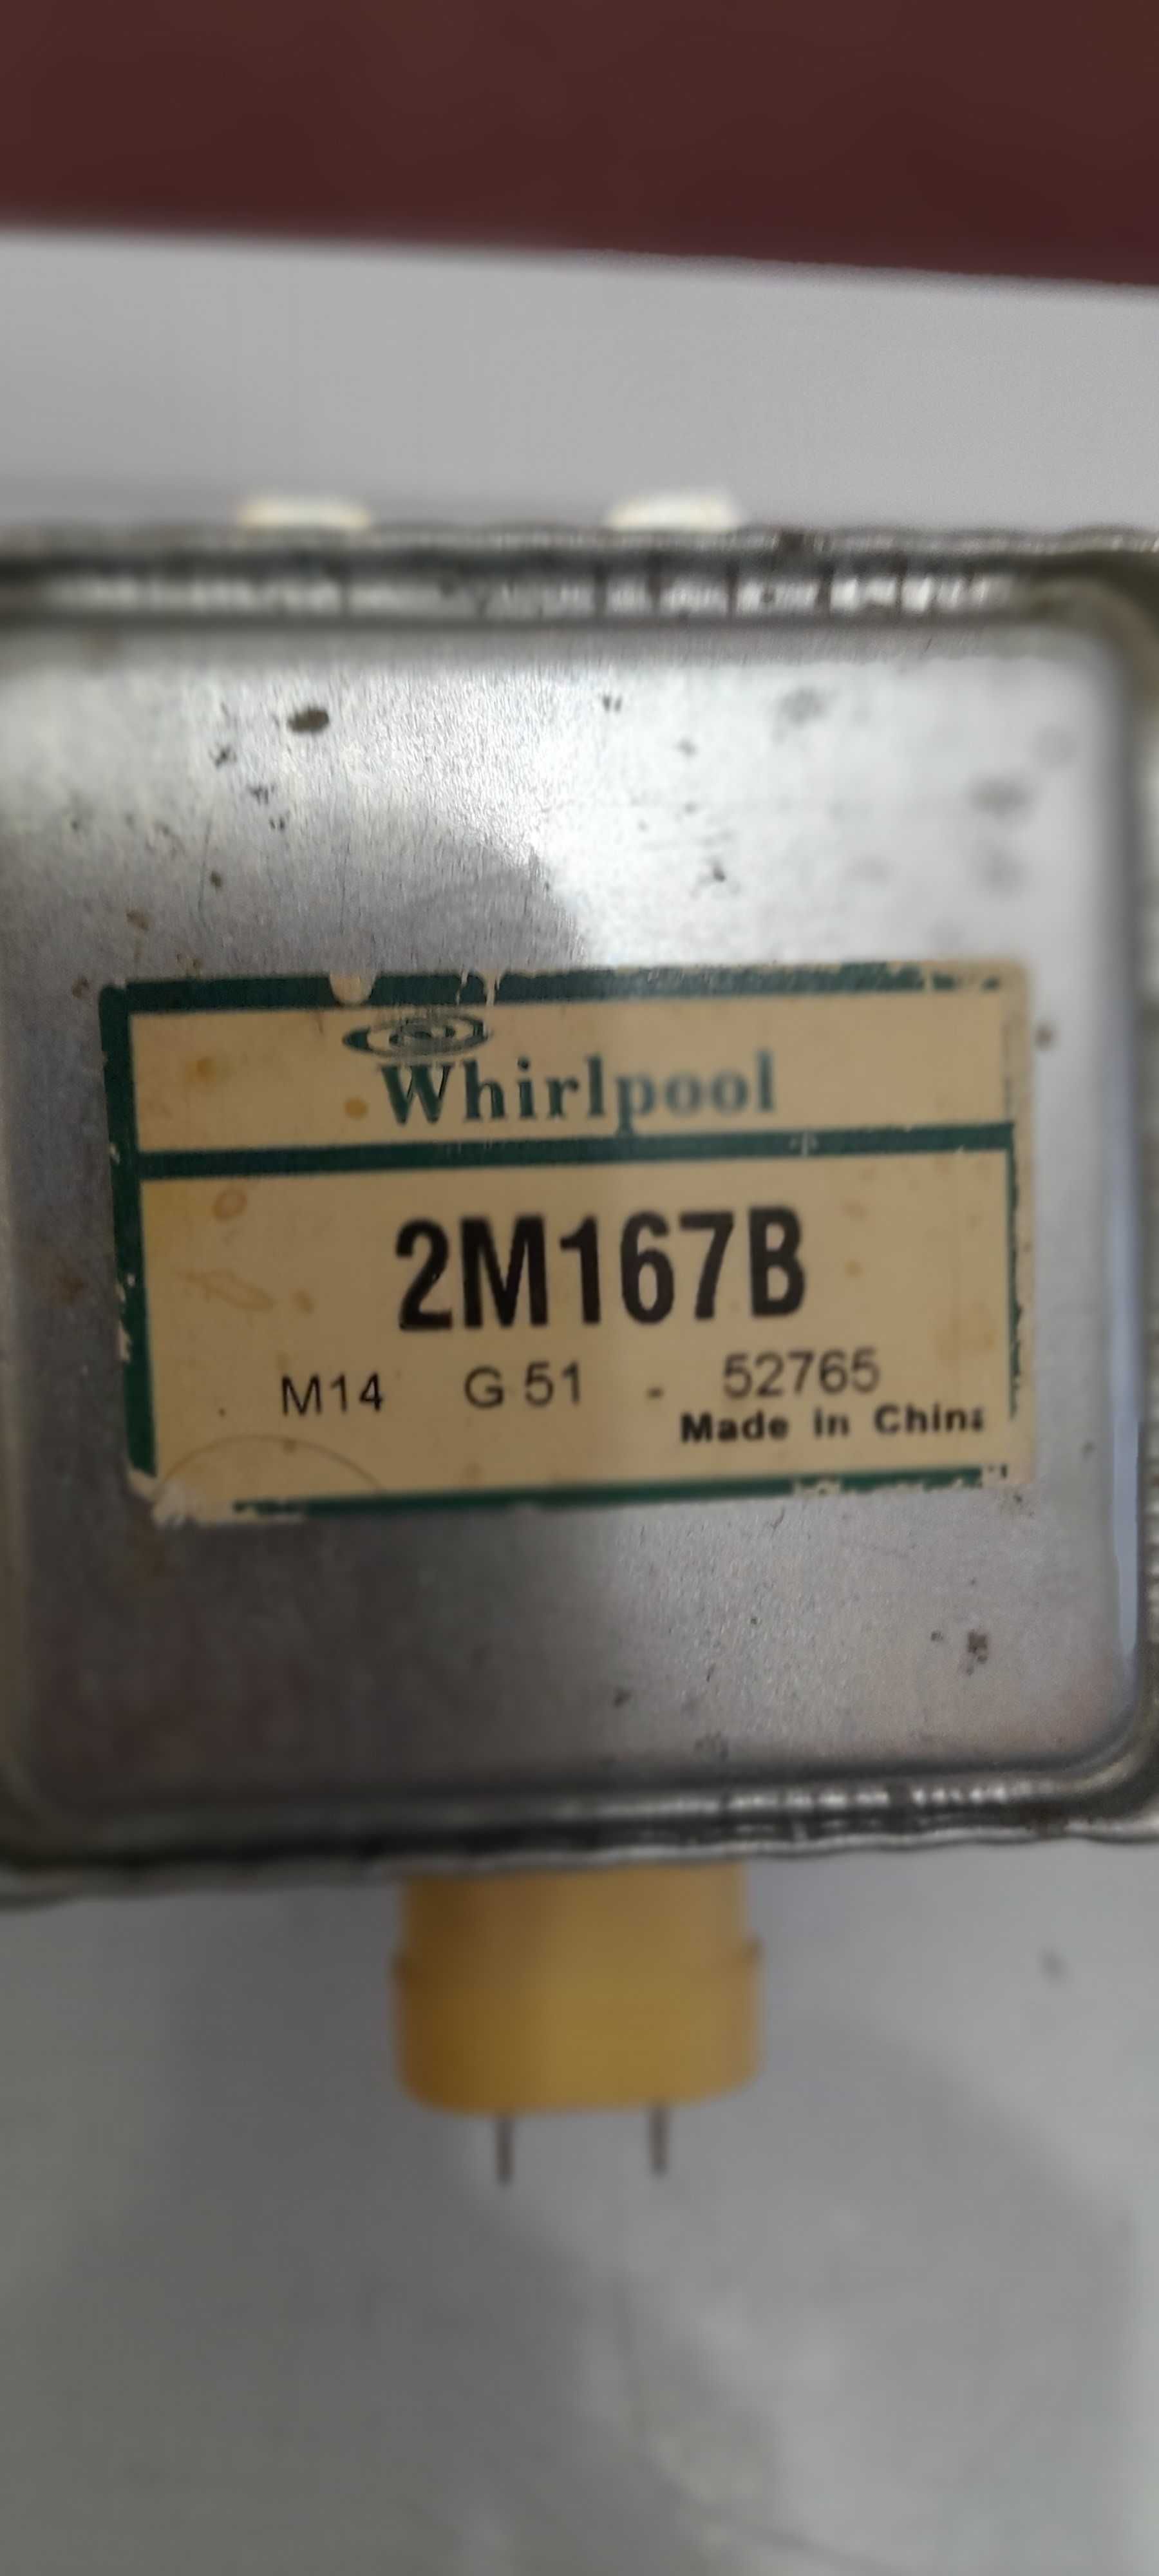 Magnetroane Whirlpool cuptor cu microunde si doua Witol 2M219J